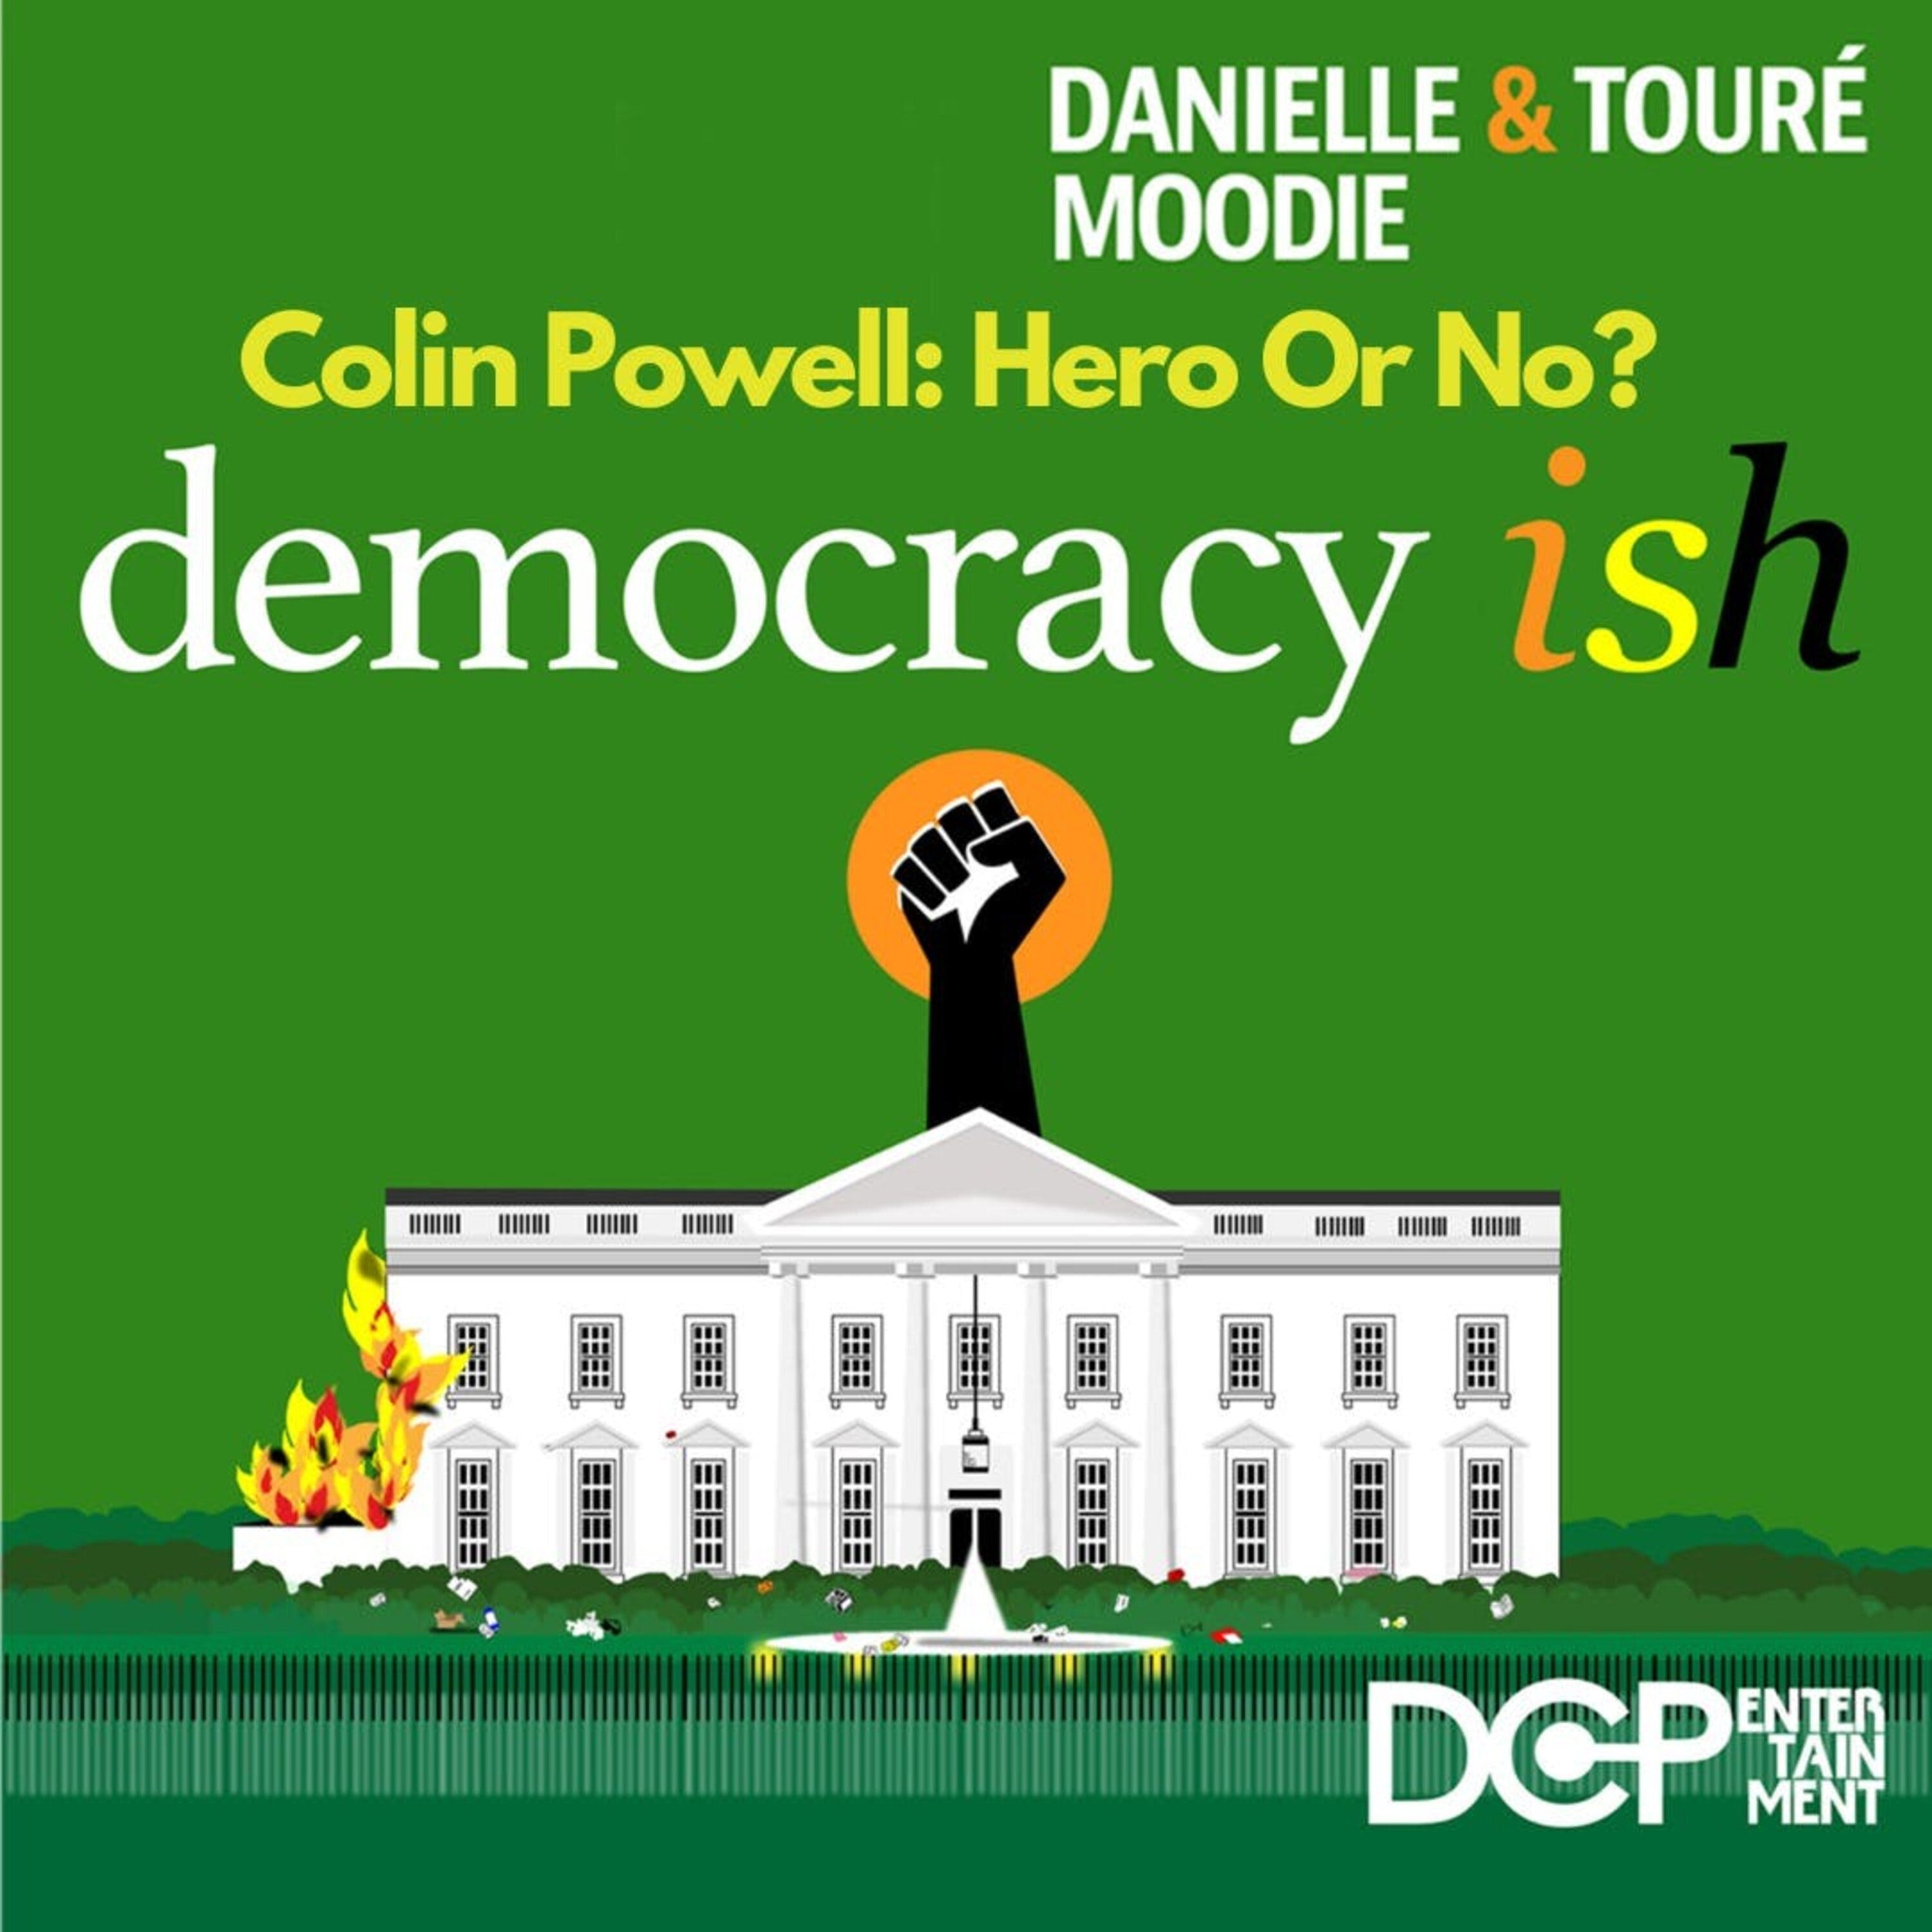 Colin Powell: Hero or No?